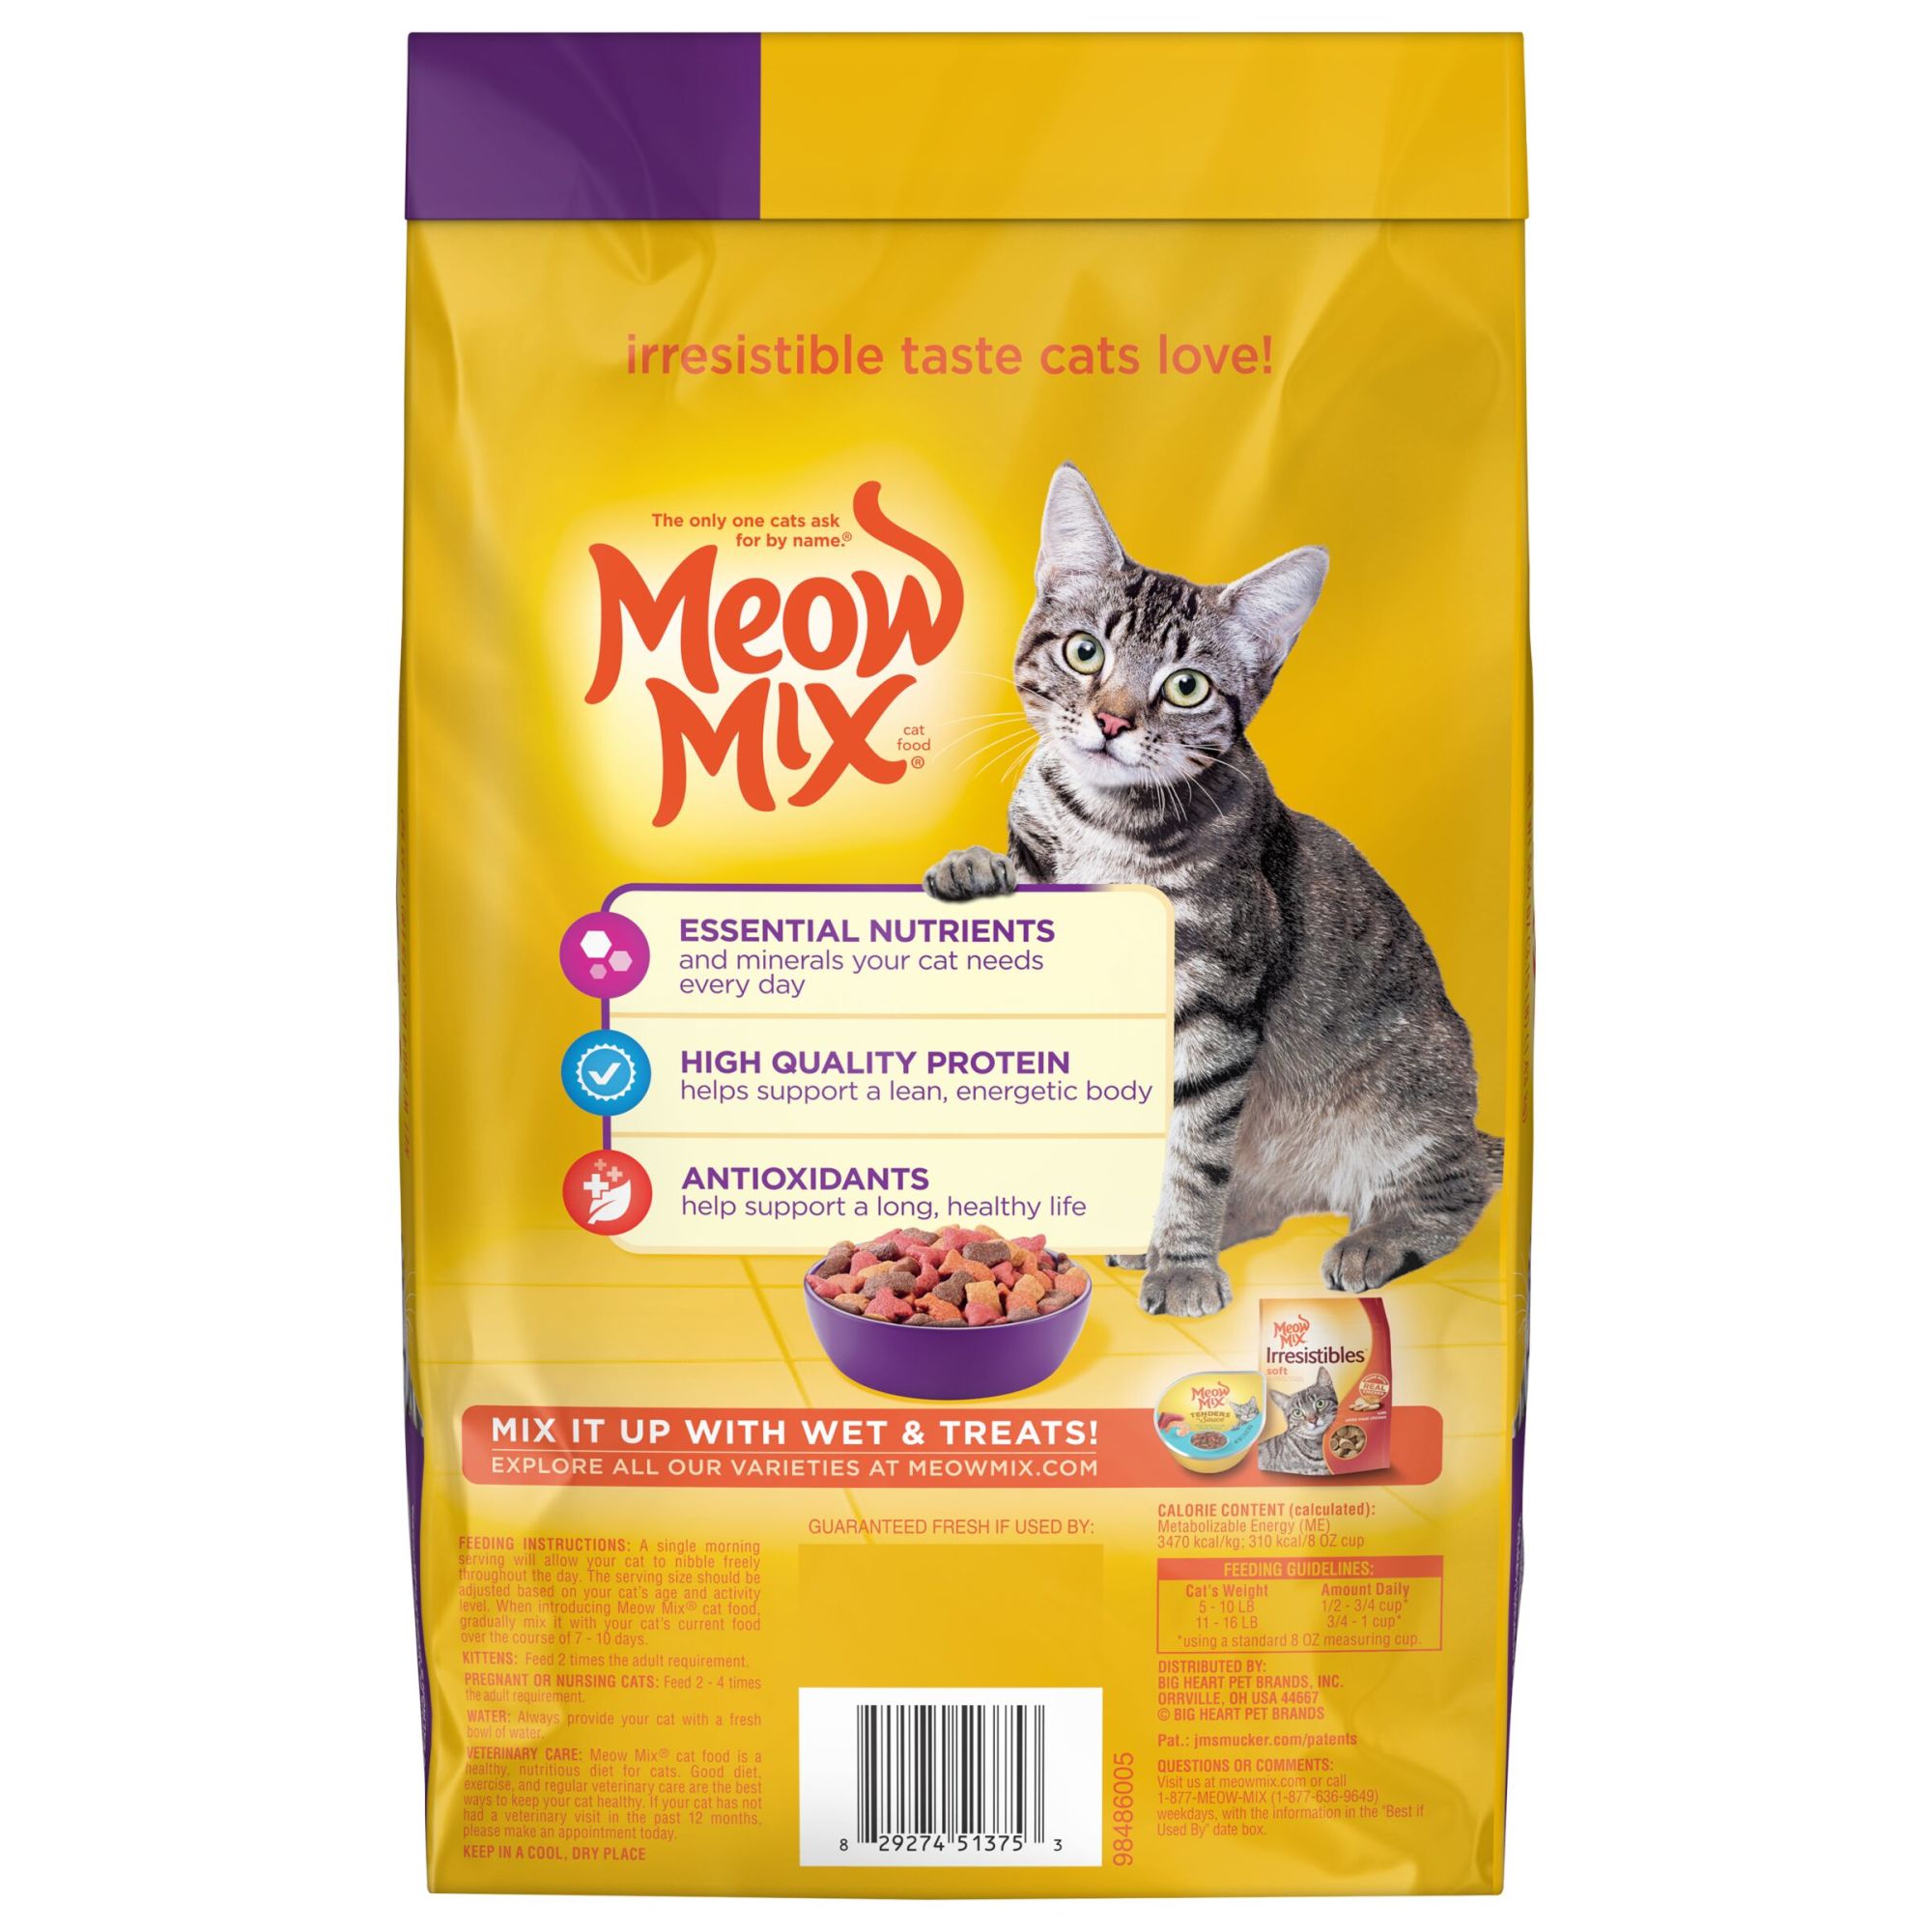 Meow Mix Original Choice Dry Cat Food, 3.15-Pound Bag - image 4 of 6